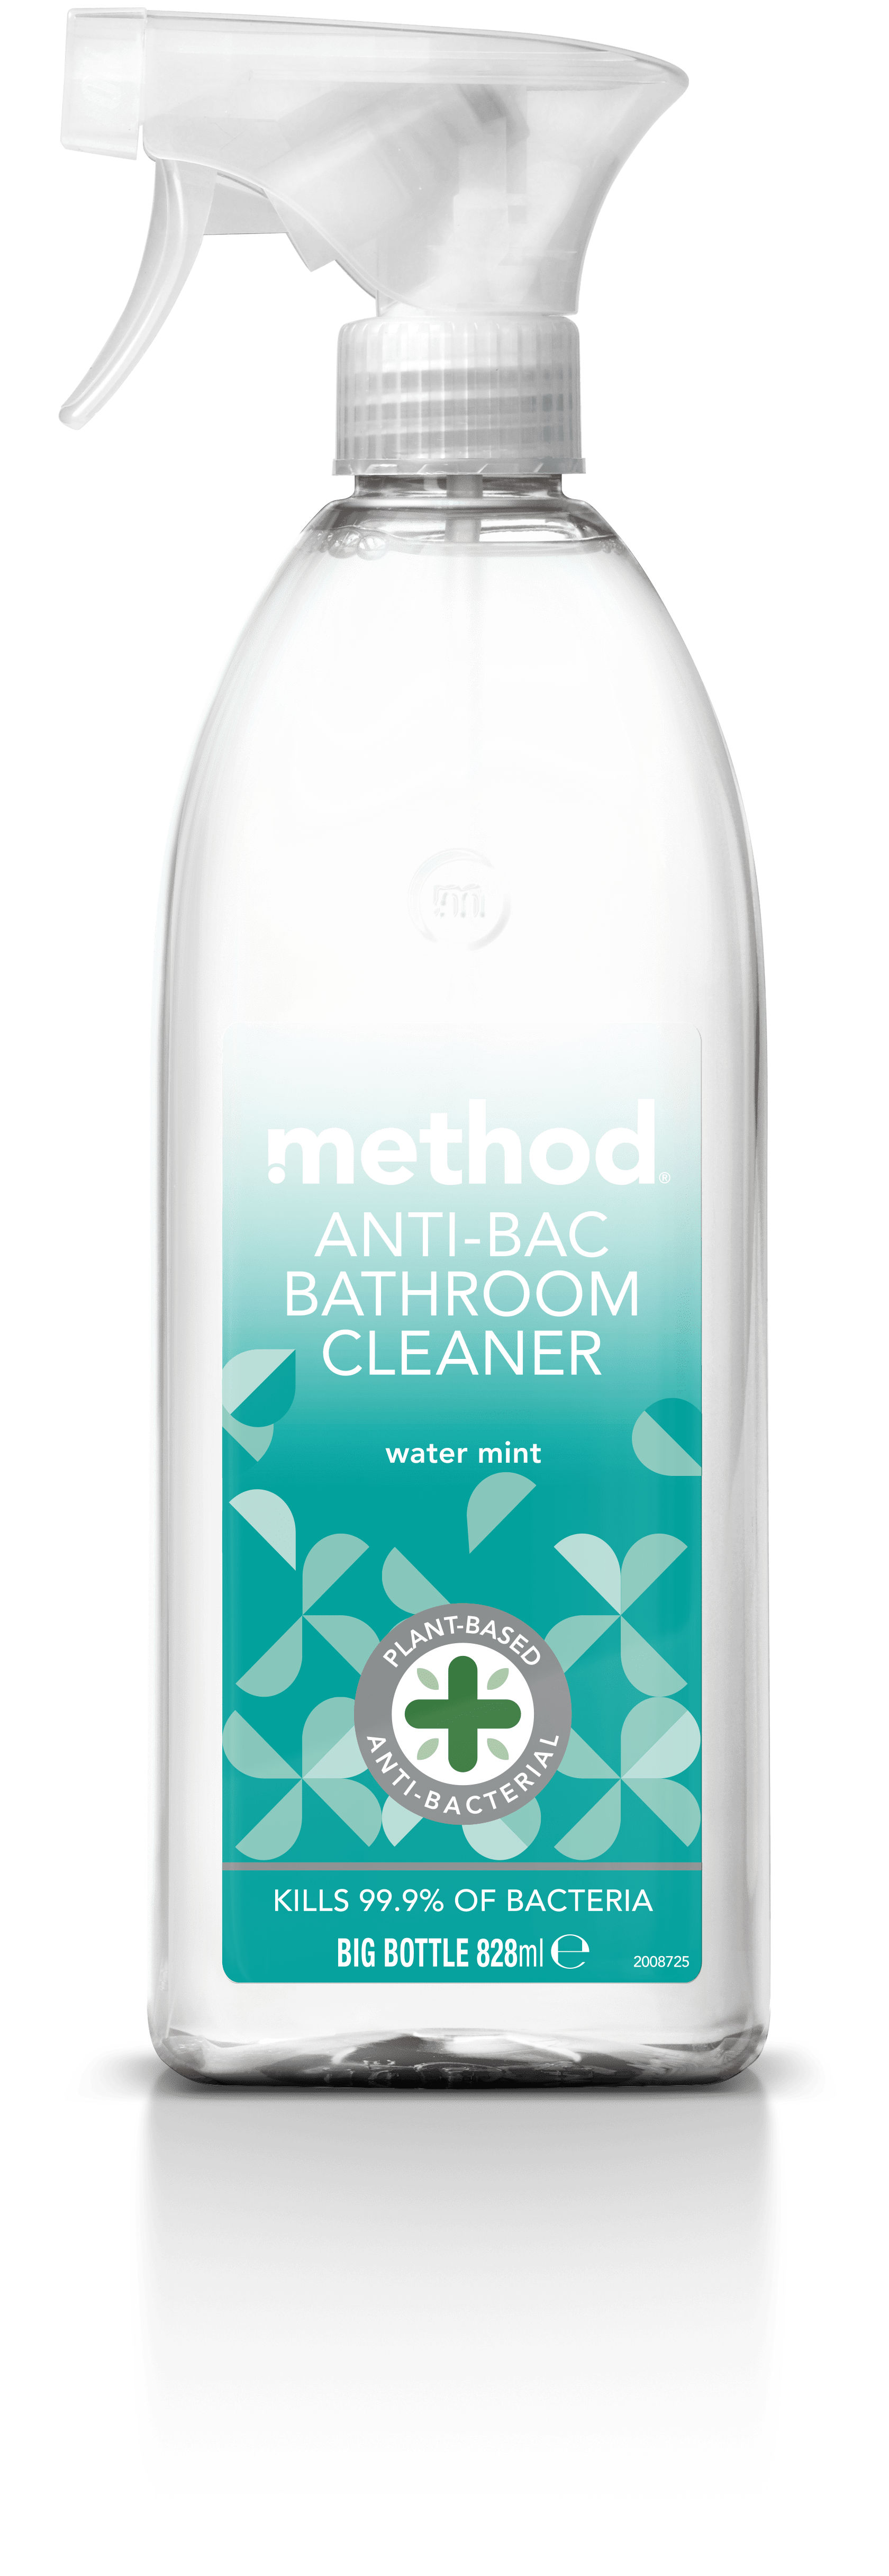 method-anti-bac-bathroom-cleaner-water-mint-828ml